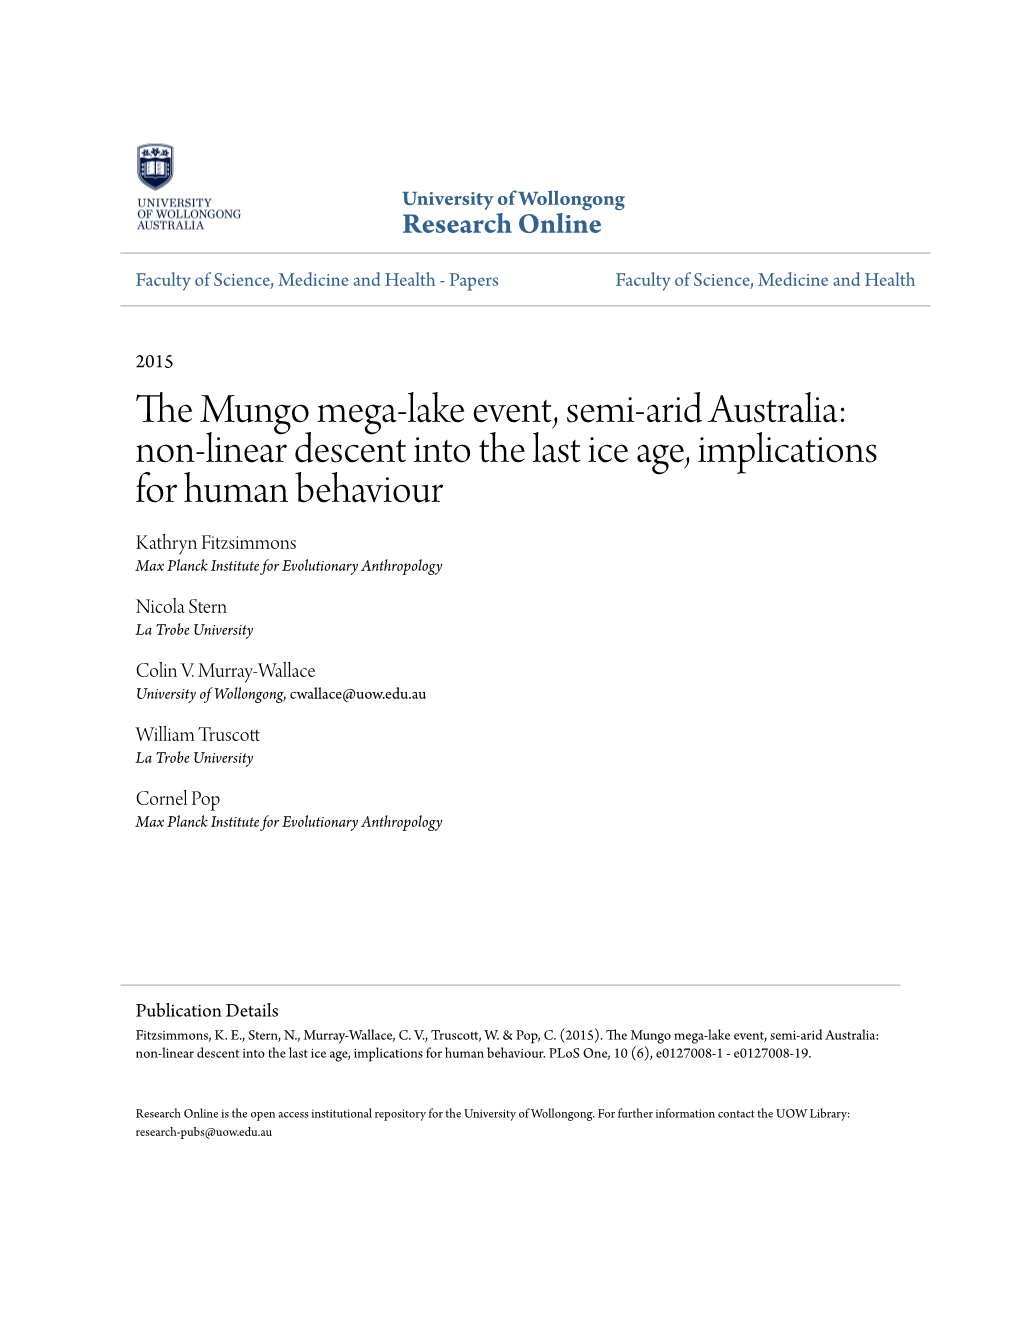 The Mungo Mega-Lake Event, Semi-Arid Australia: Non-Linear Descent Into the Last Ice Age, Implications for Human Behaviour